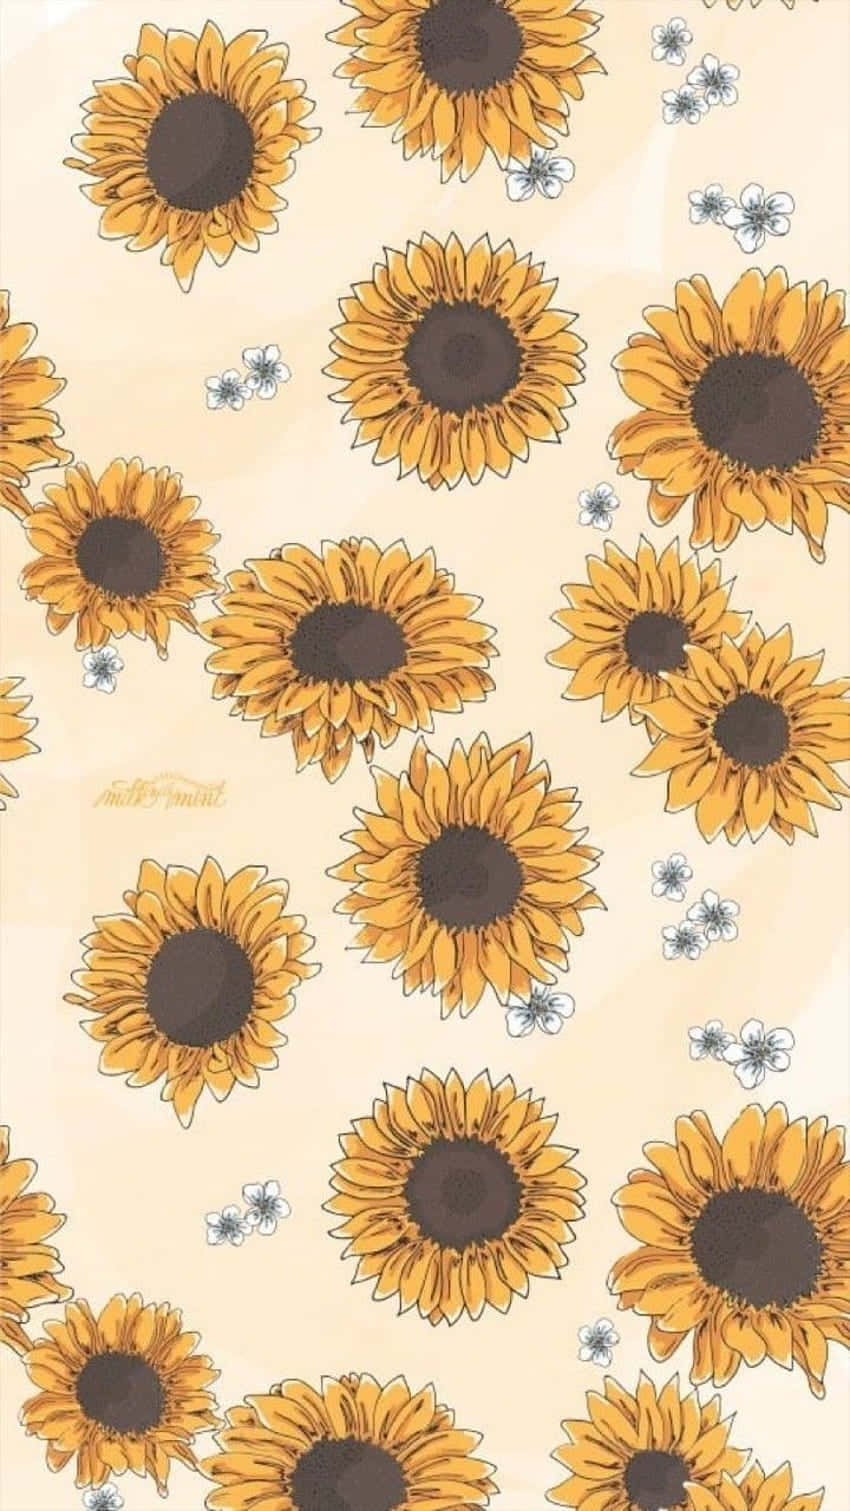 Cheerful Yellow Sunflowers to Brighten Your Day! Wallpaper